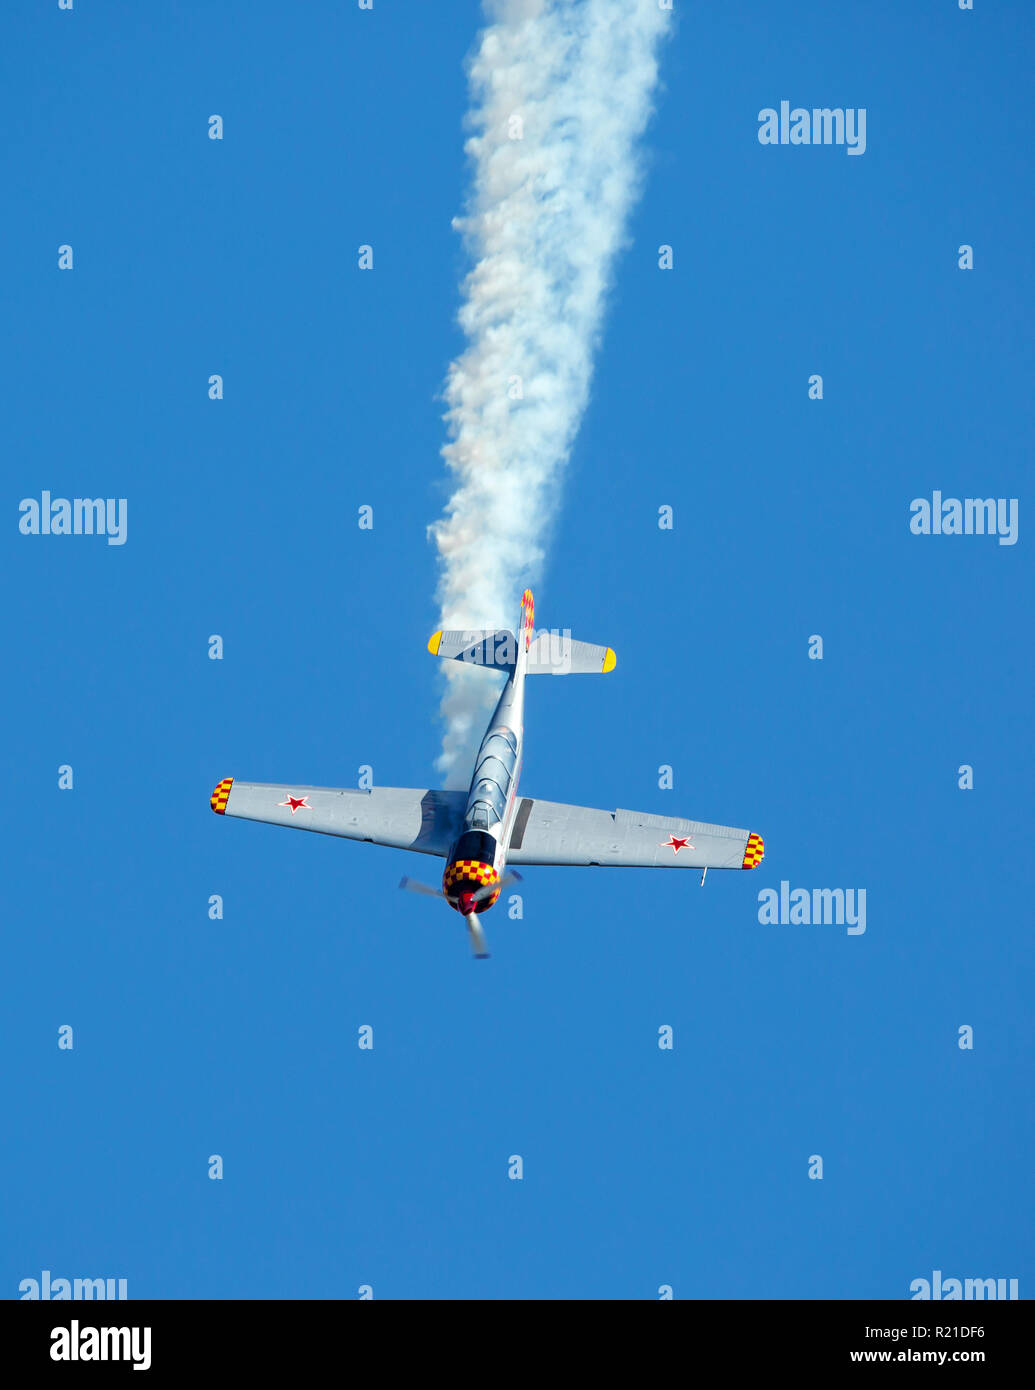 MONROE, NC (USA) - November 10, 2018: An aerobatic aircraft performs a dive in deep blue sky at the Warbirds Over Monroe Air Show. Stock Photo